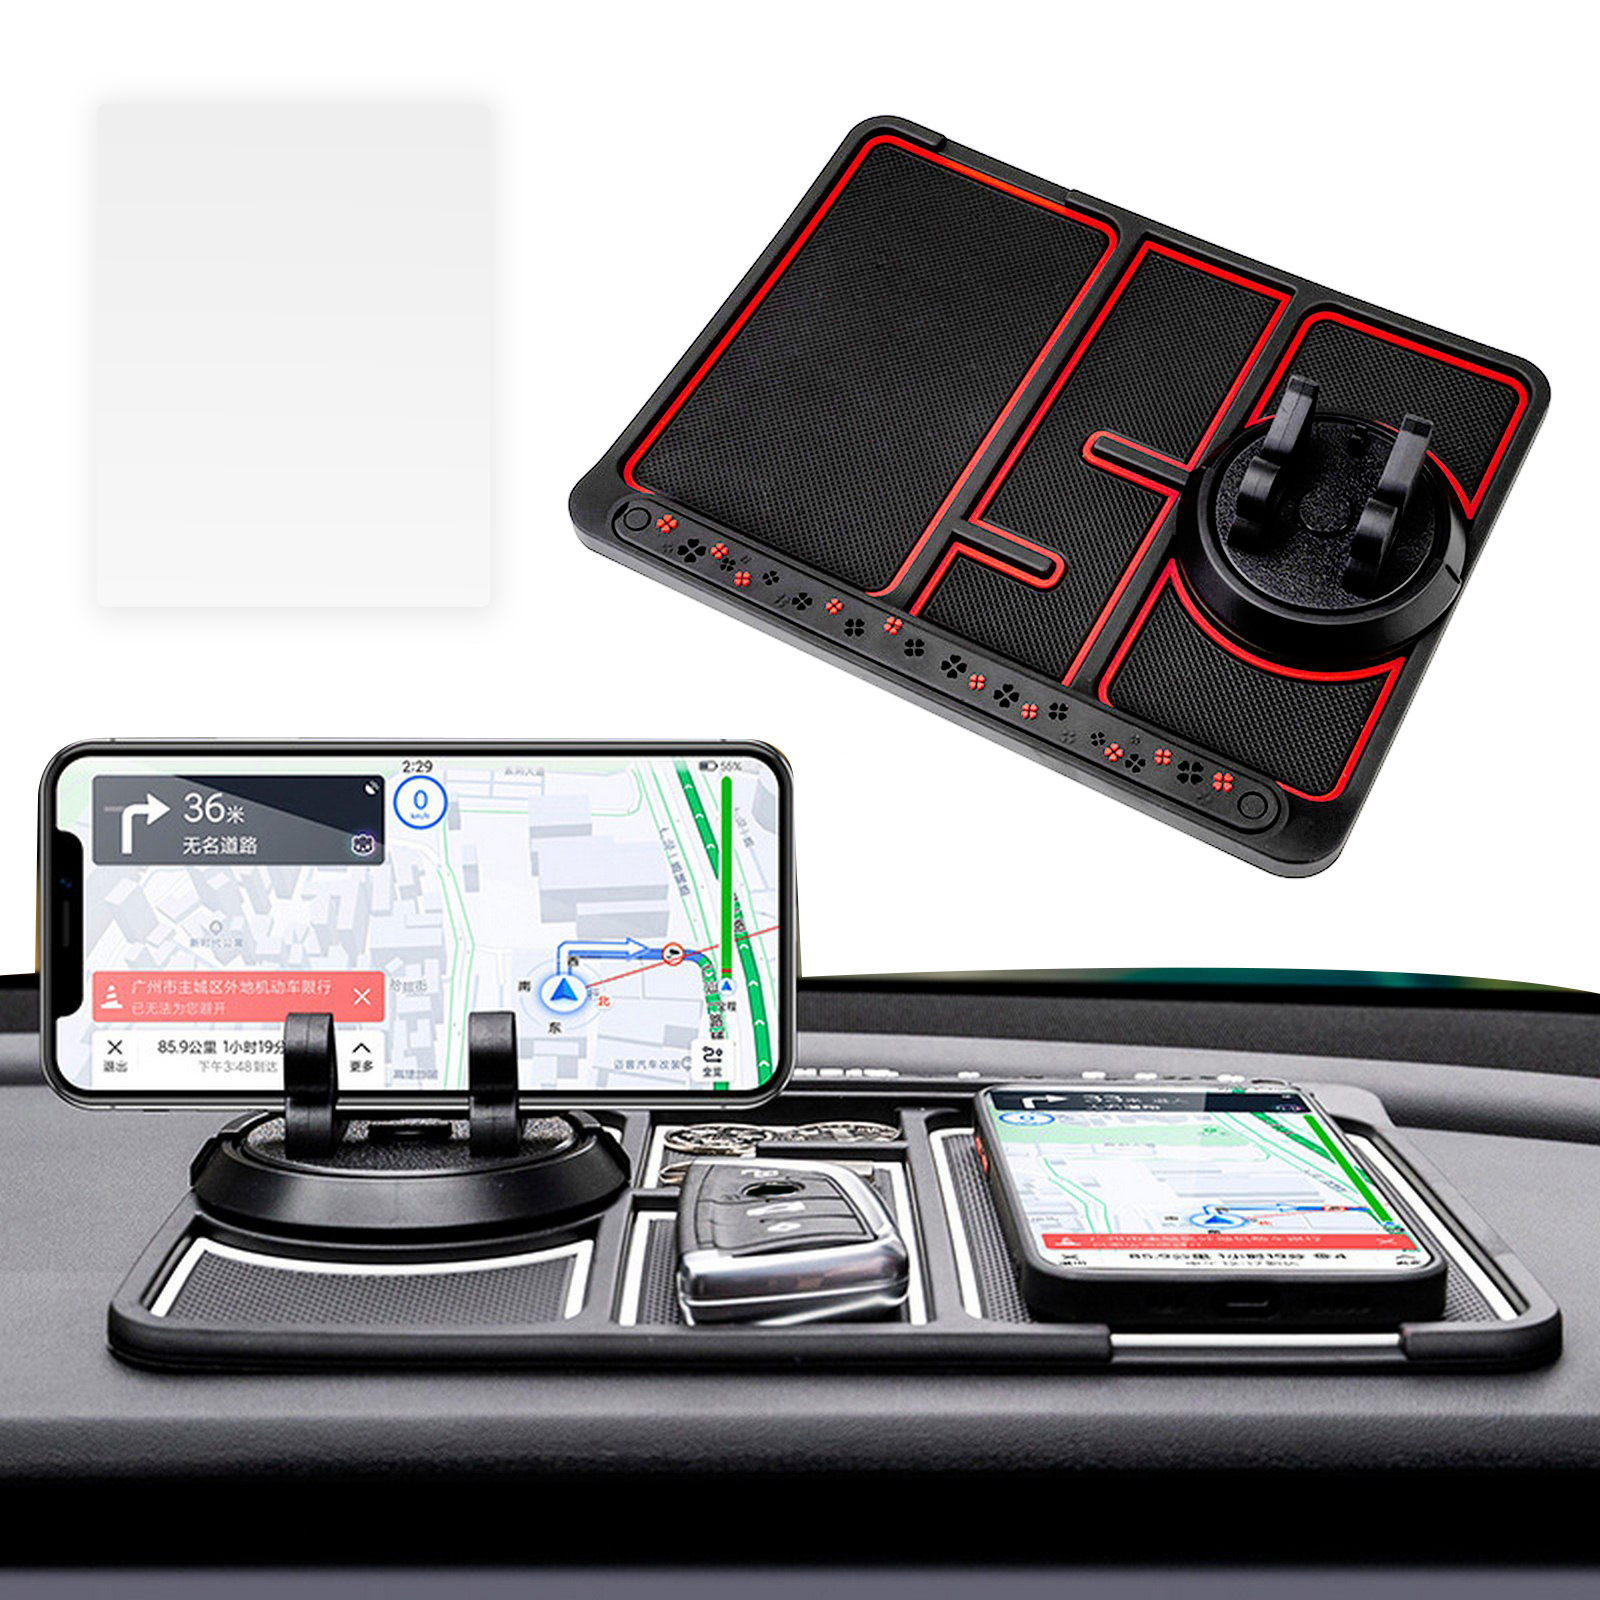 Multifunctional Car Anti-Slip Mat Rotatable Phone Holder Non Slip